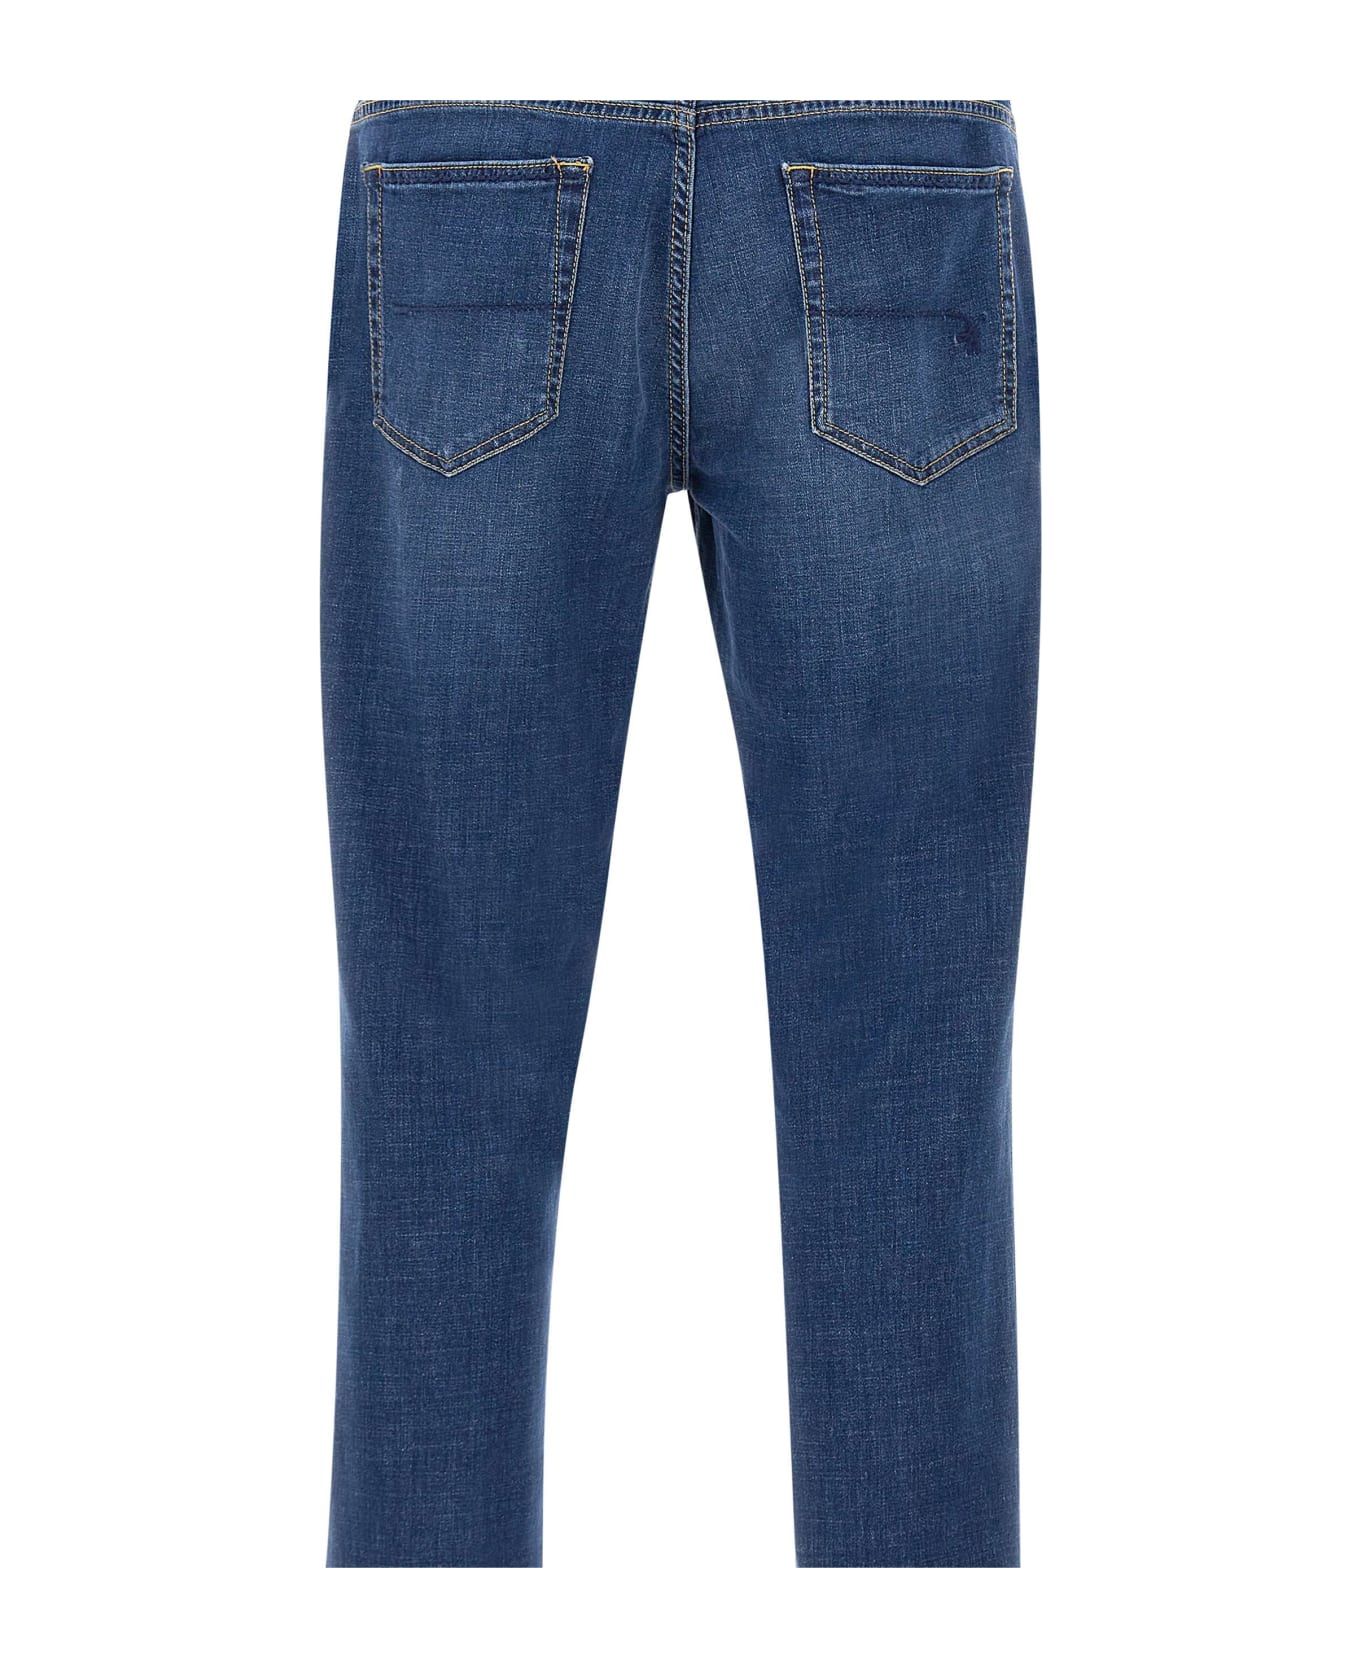 Re-HasH "rubens Z" Jeans - BLUE デニム